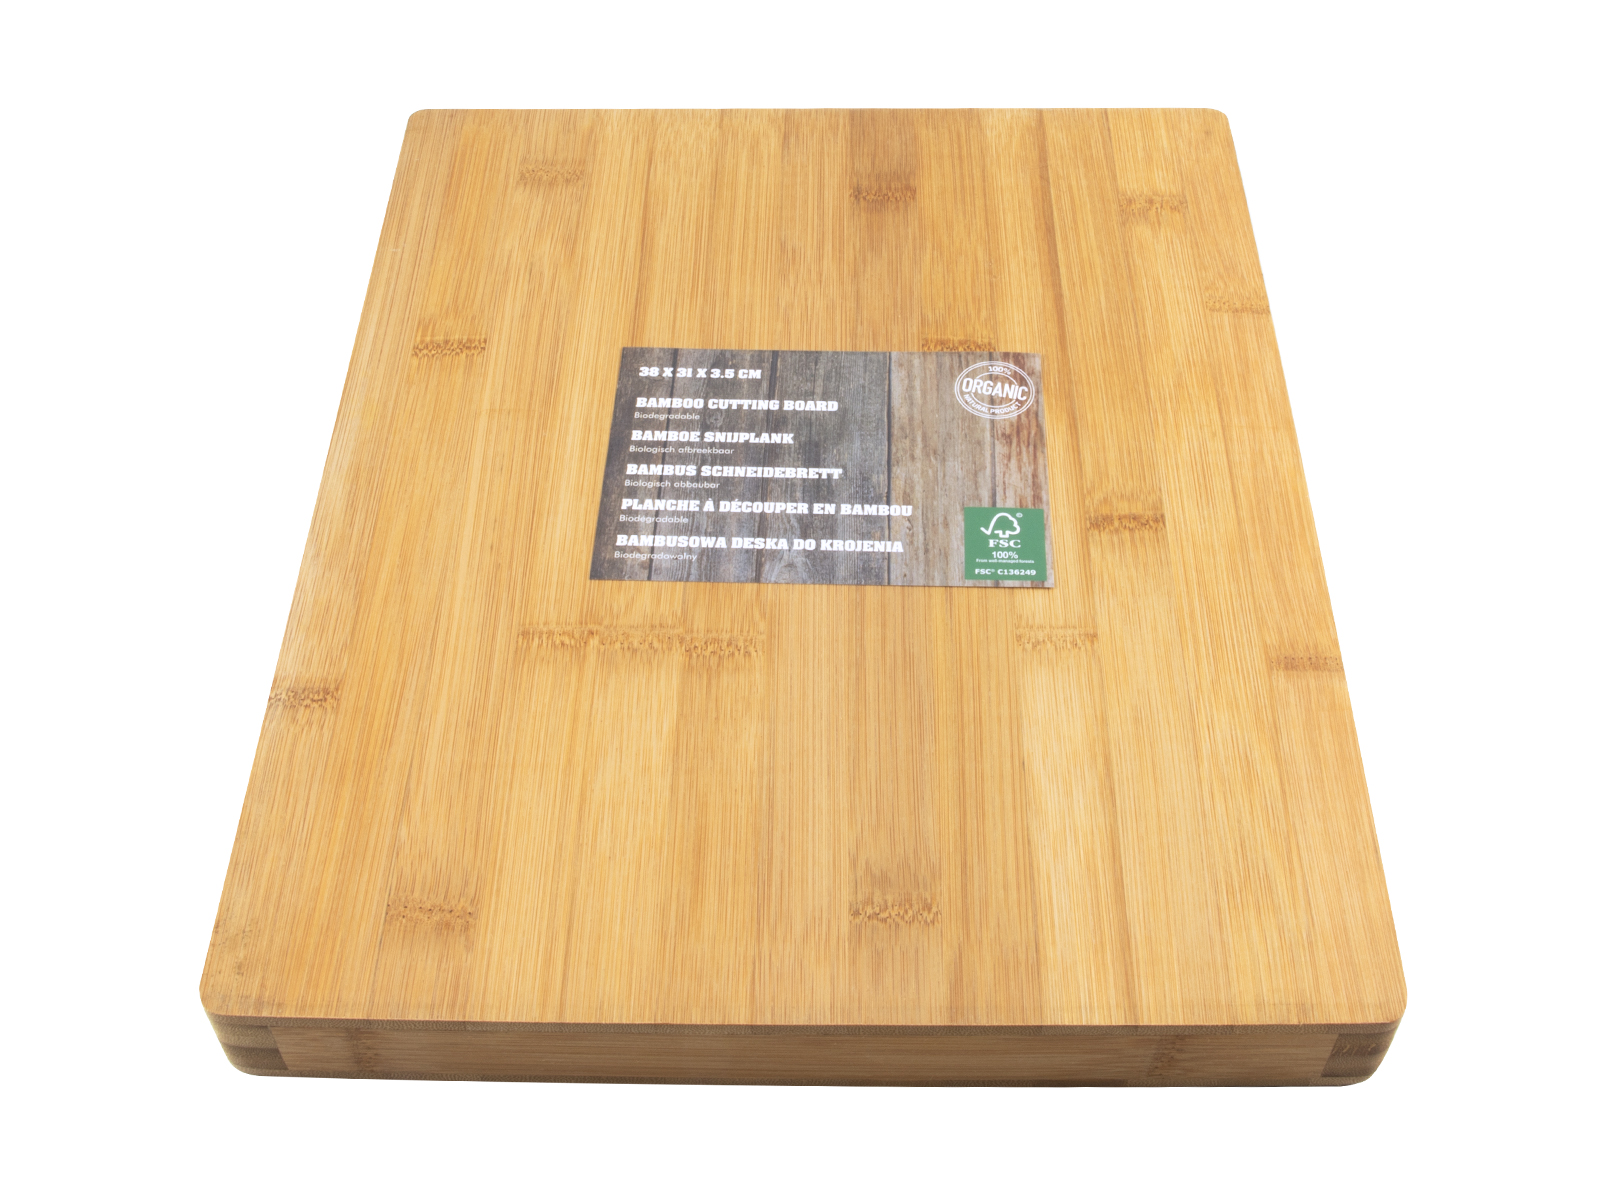 Zassenhaus bread cutting board bamboo 42x28.5x2 cm